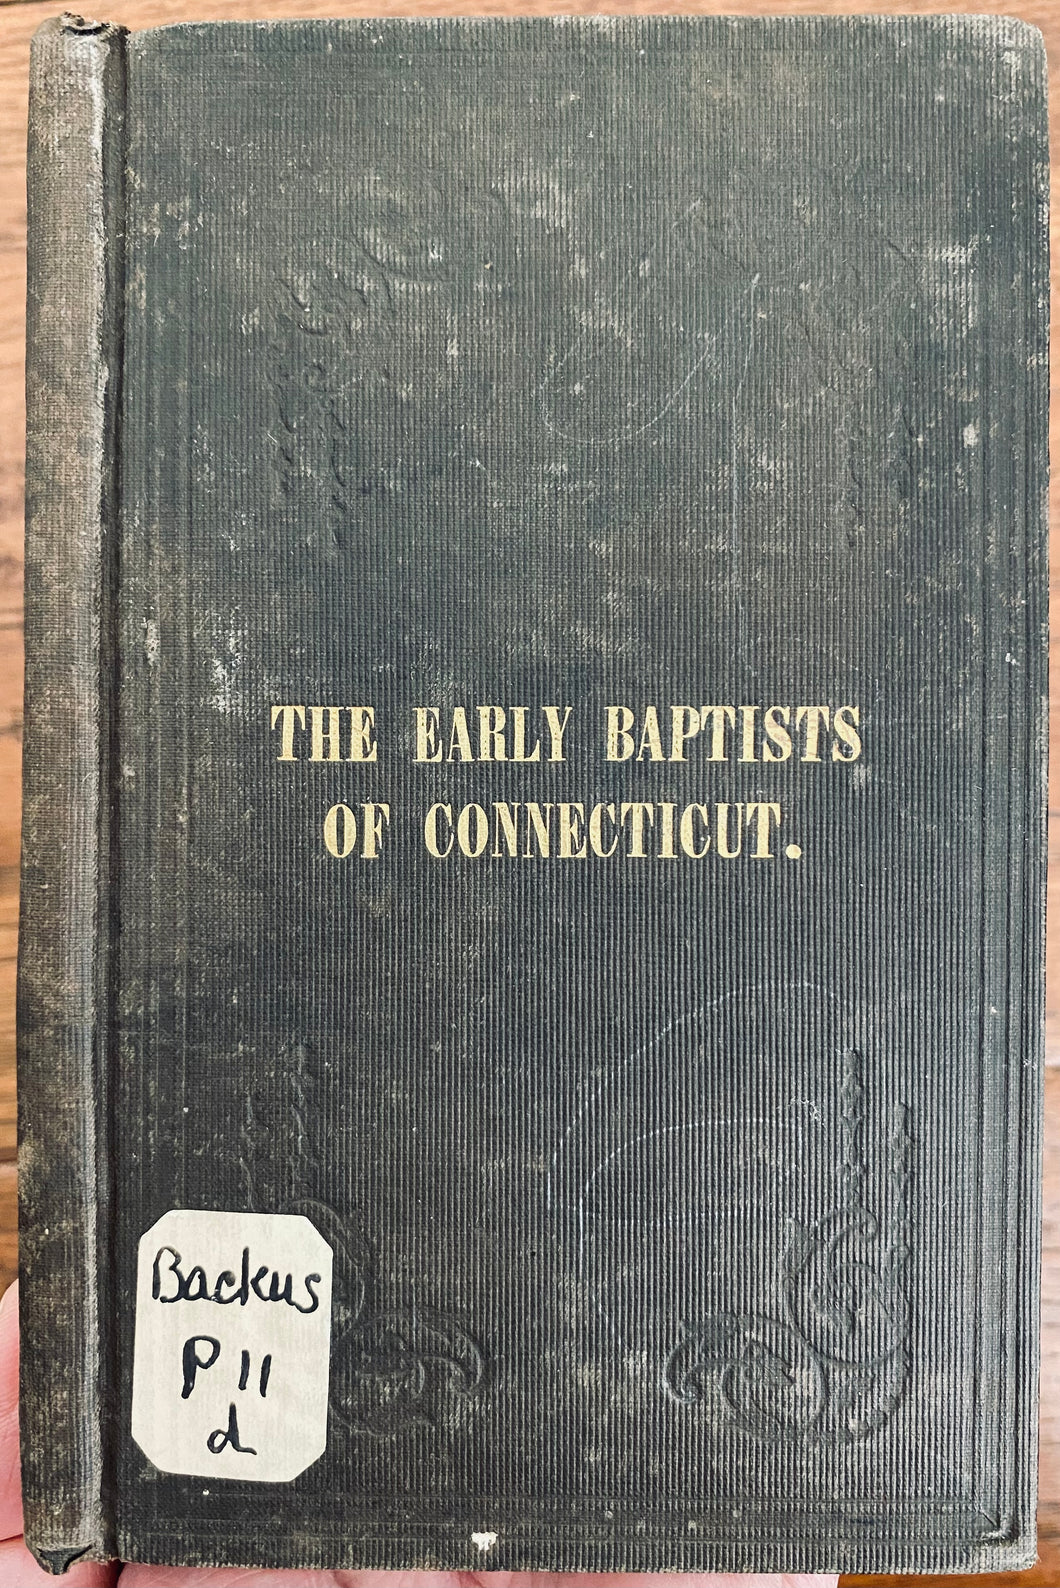 1844 ALBERT G. PALMER. Isaac Backus and Baptist Great Awakening in Connecticut.